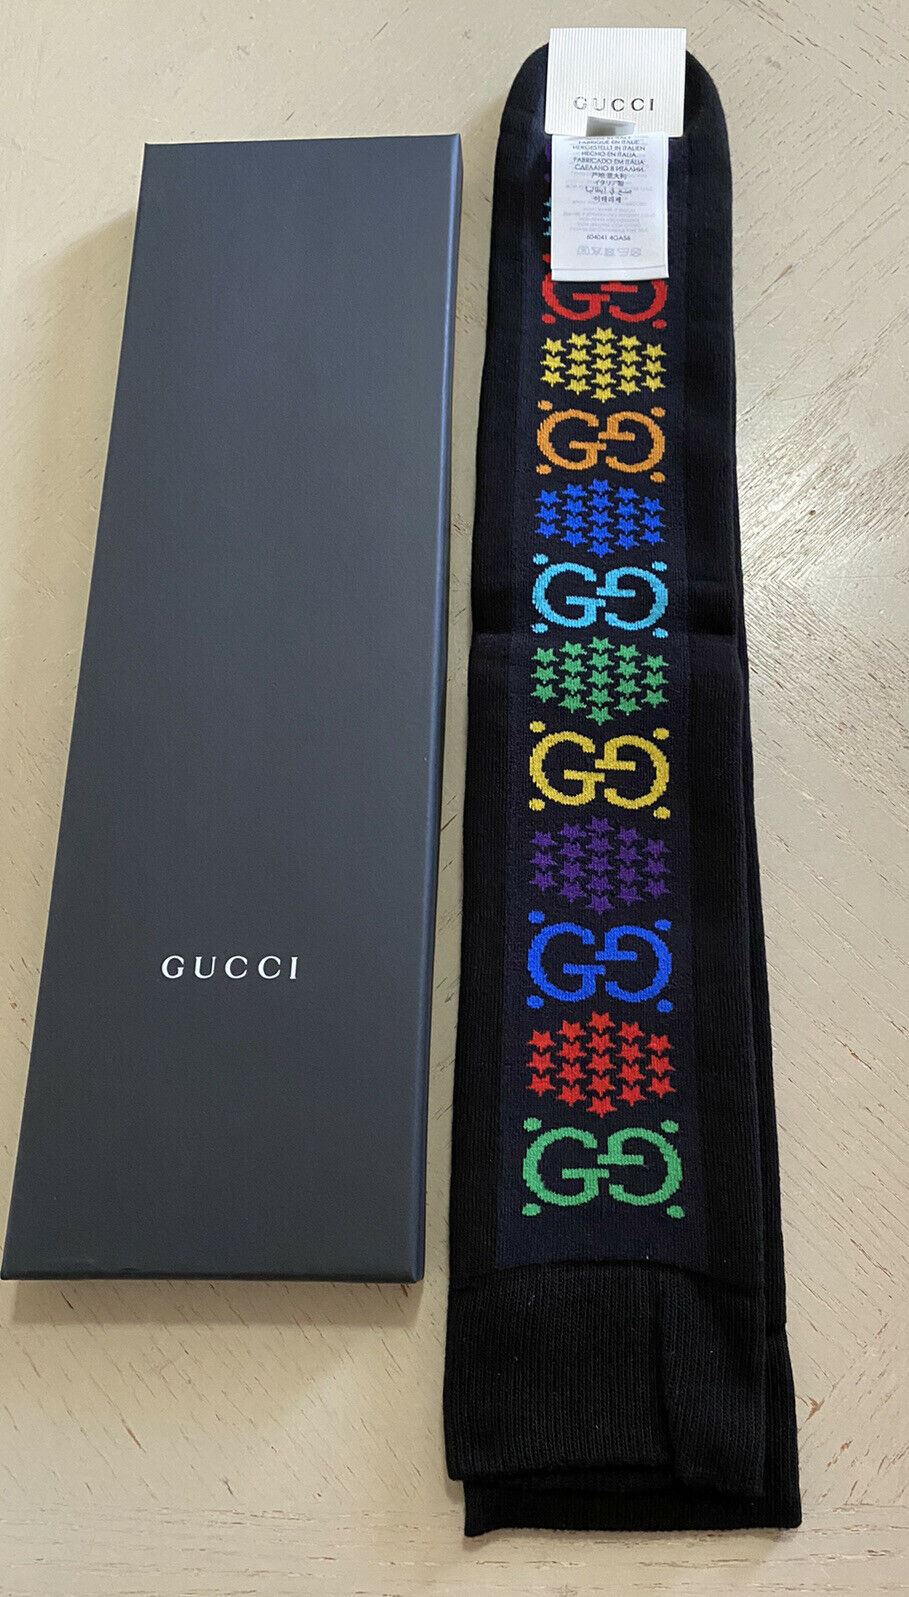 NWT Gucci GG Monogram Socks Black/Red/Blue/Yellow Size M Italy